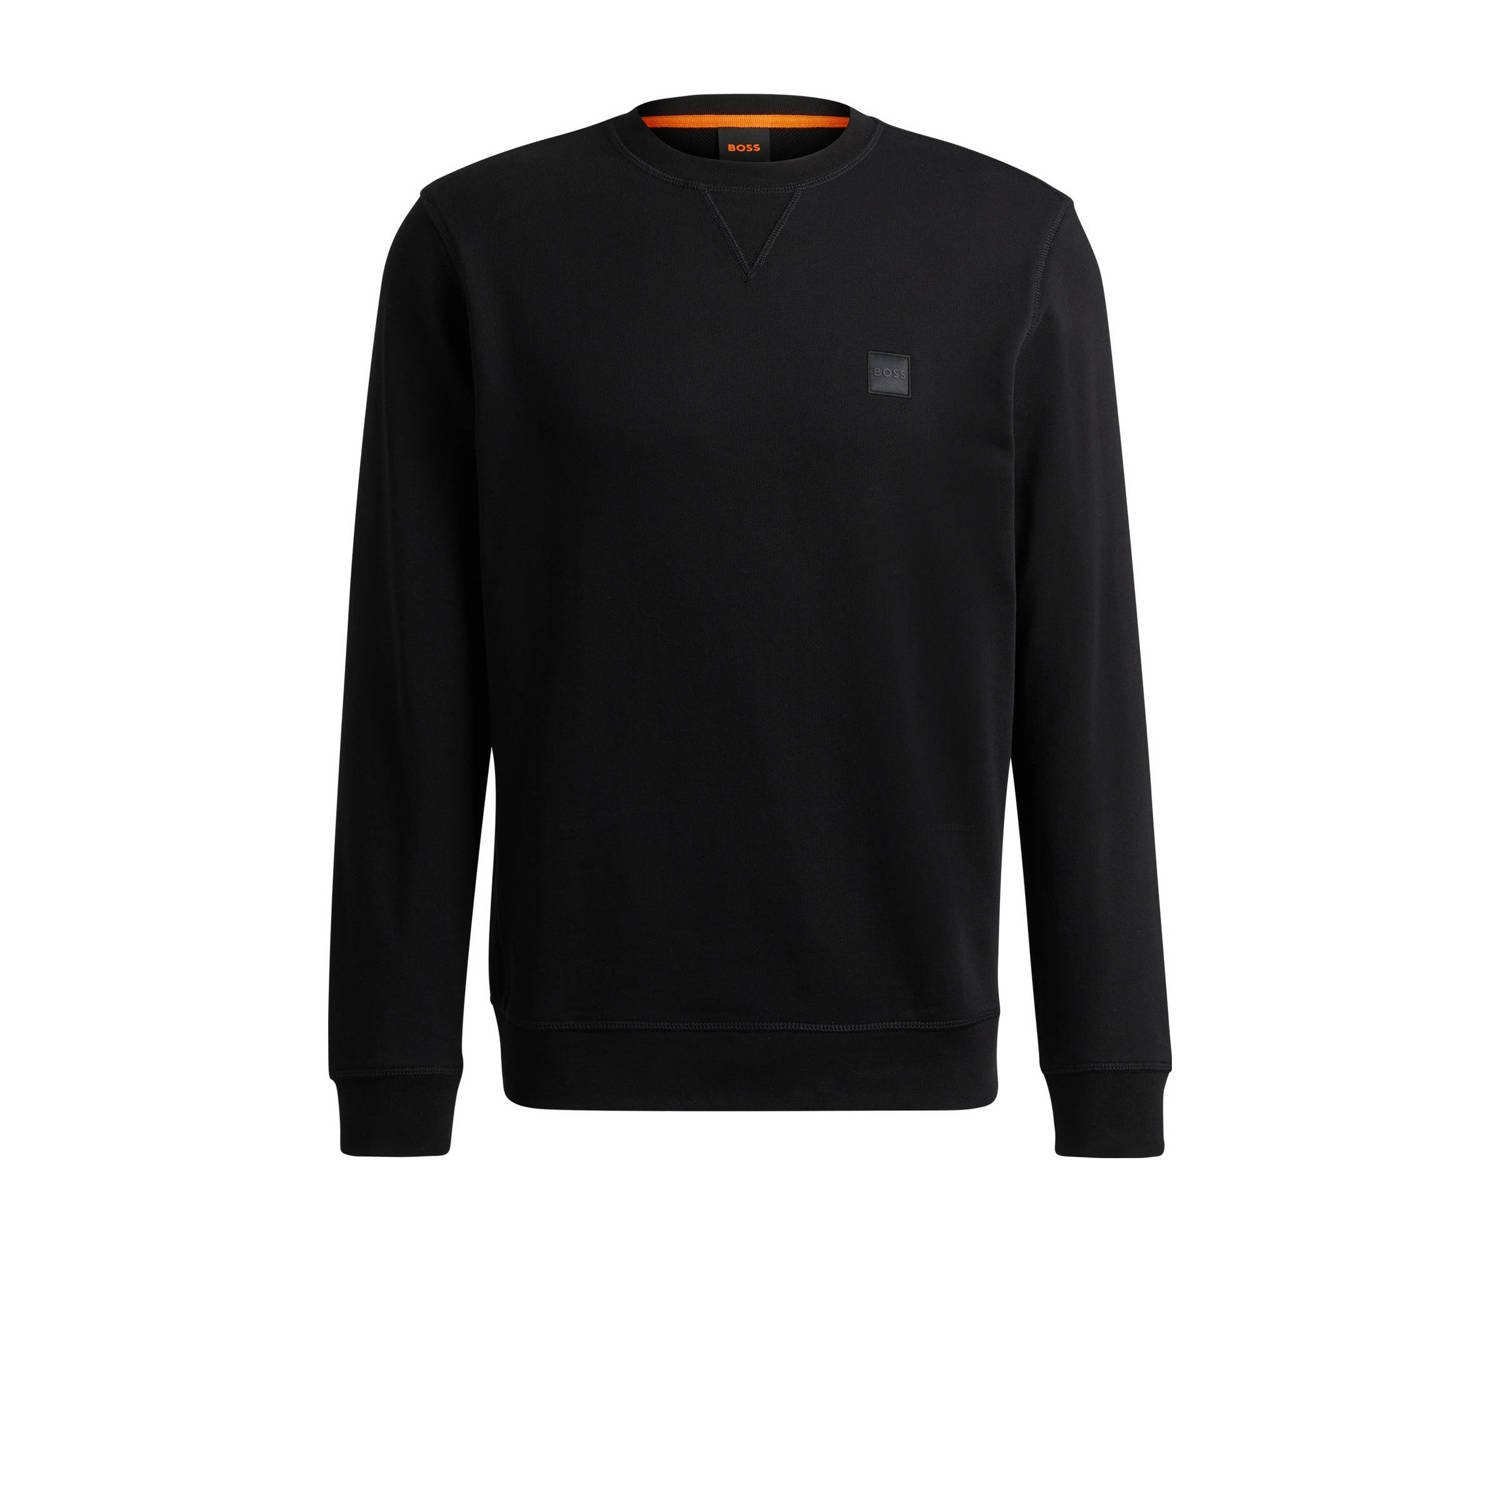 BOSS sweater Westart met logo zwart